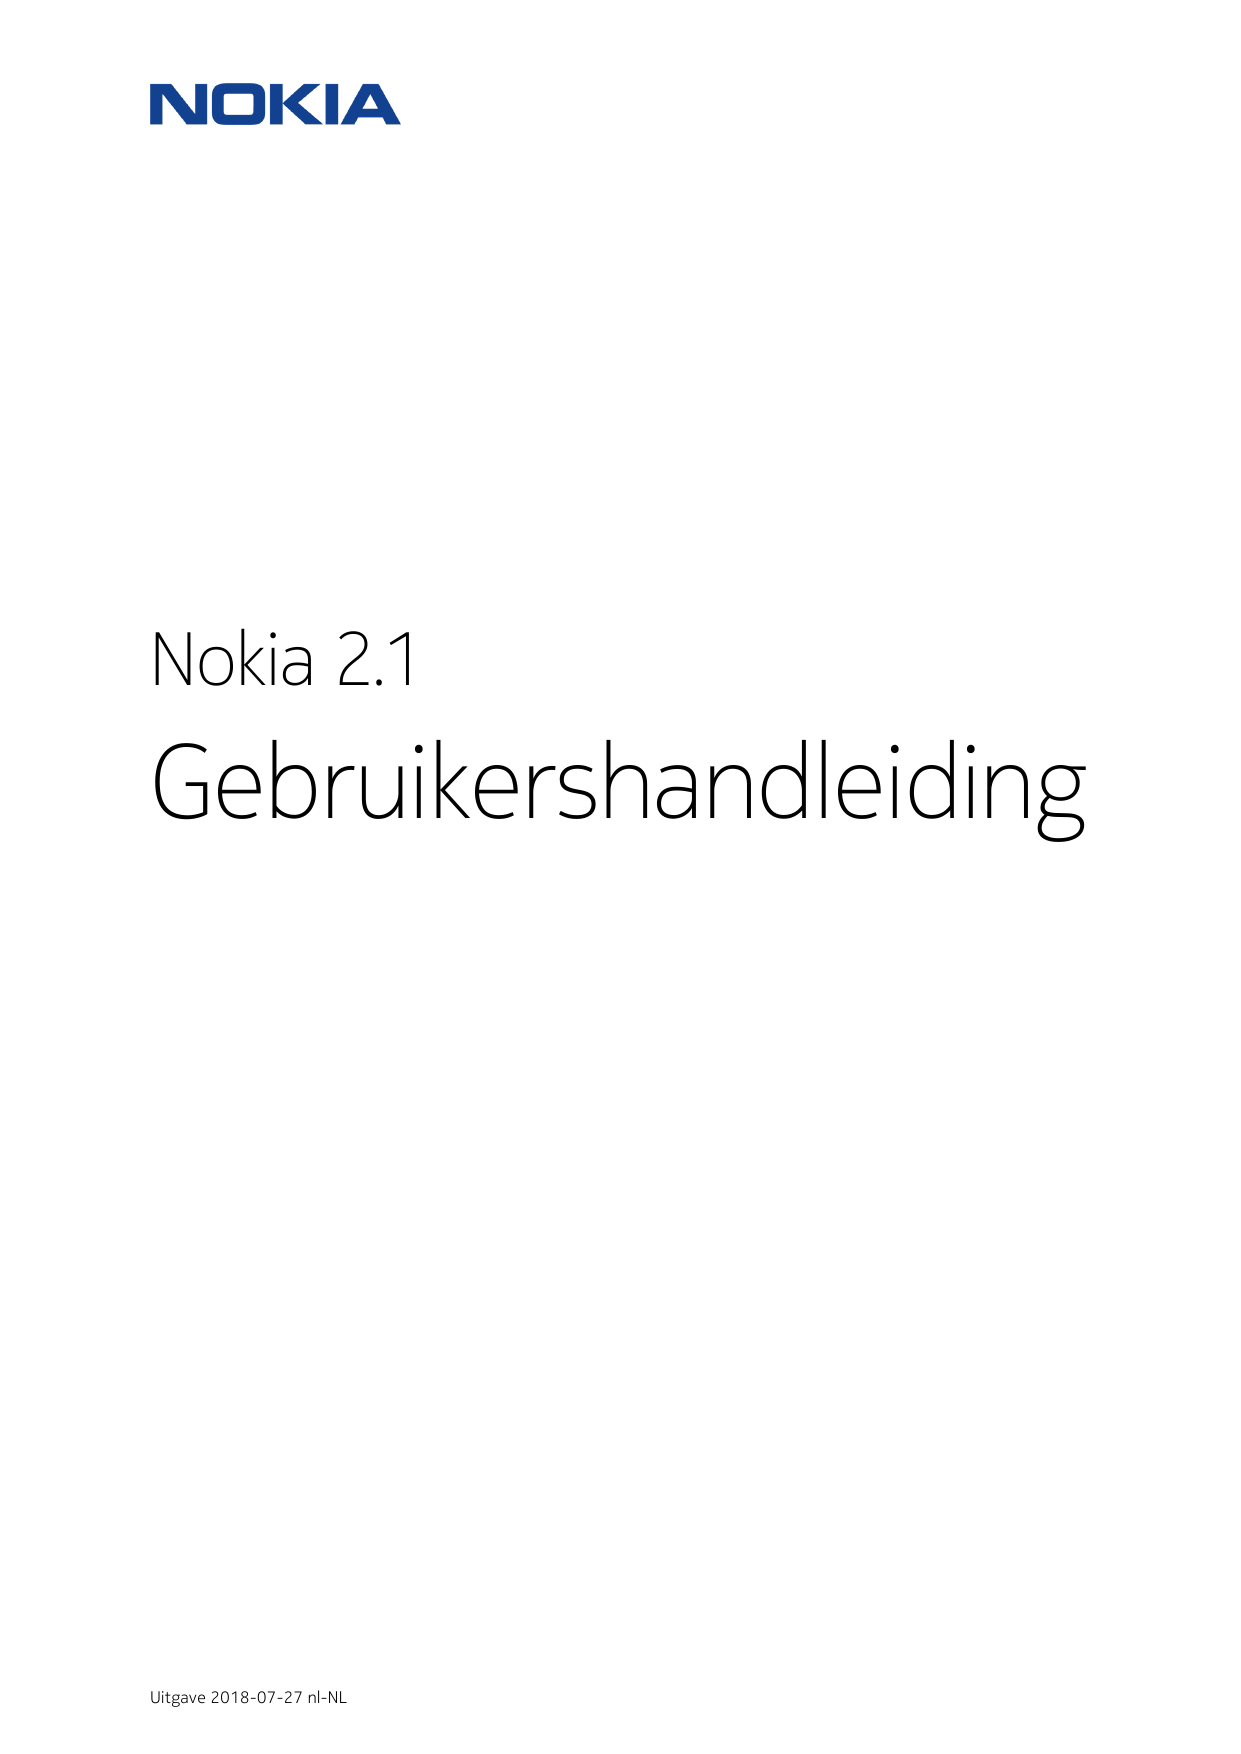 Nokia 2.1GebruikershandleidingUitgave 2018-07-27 nl-NL